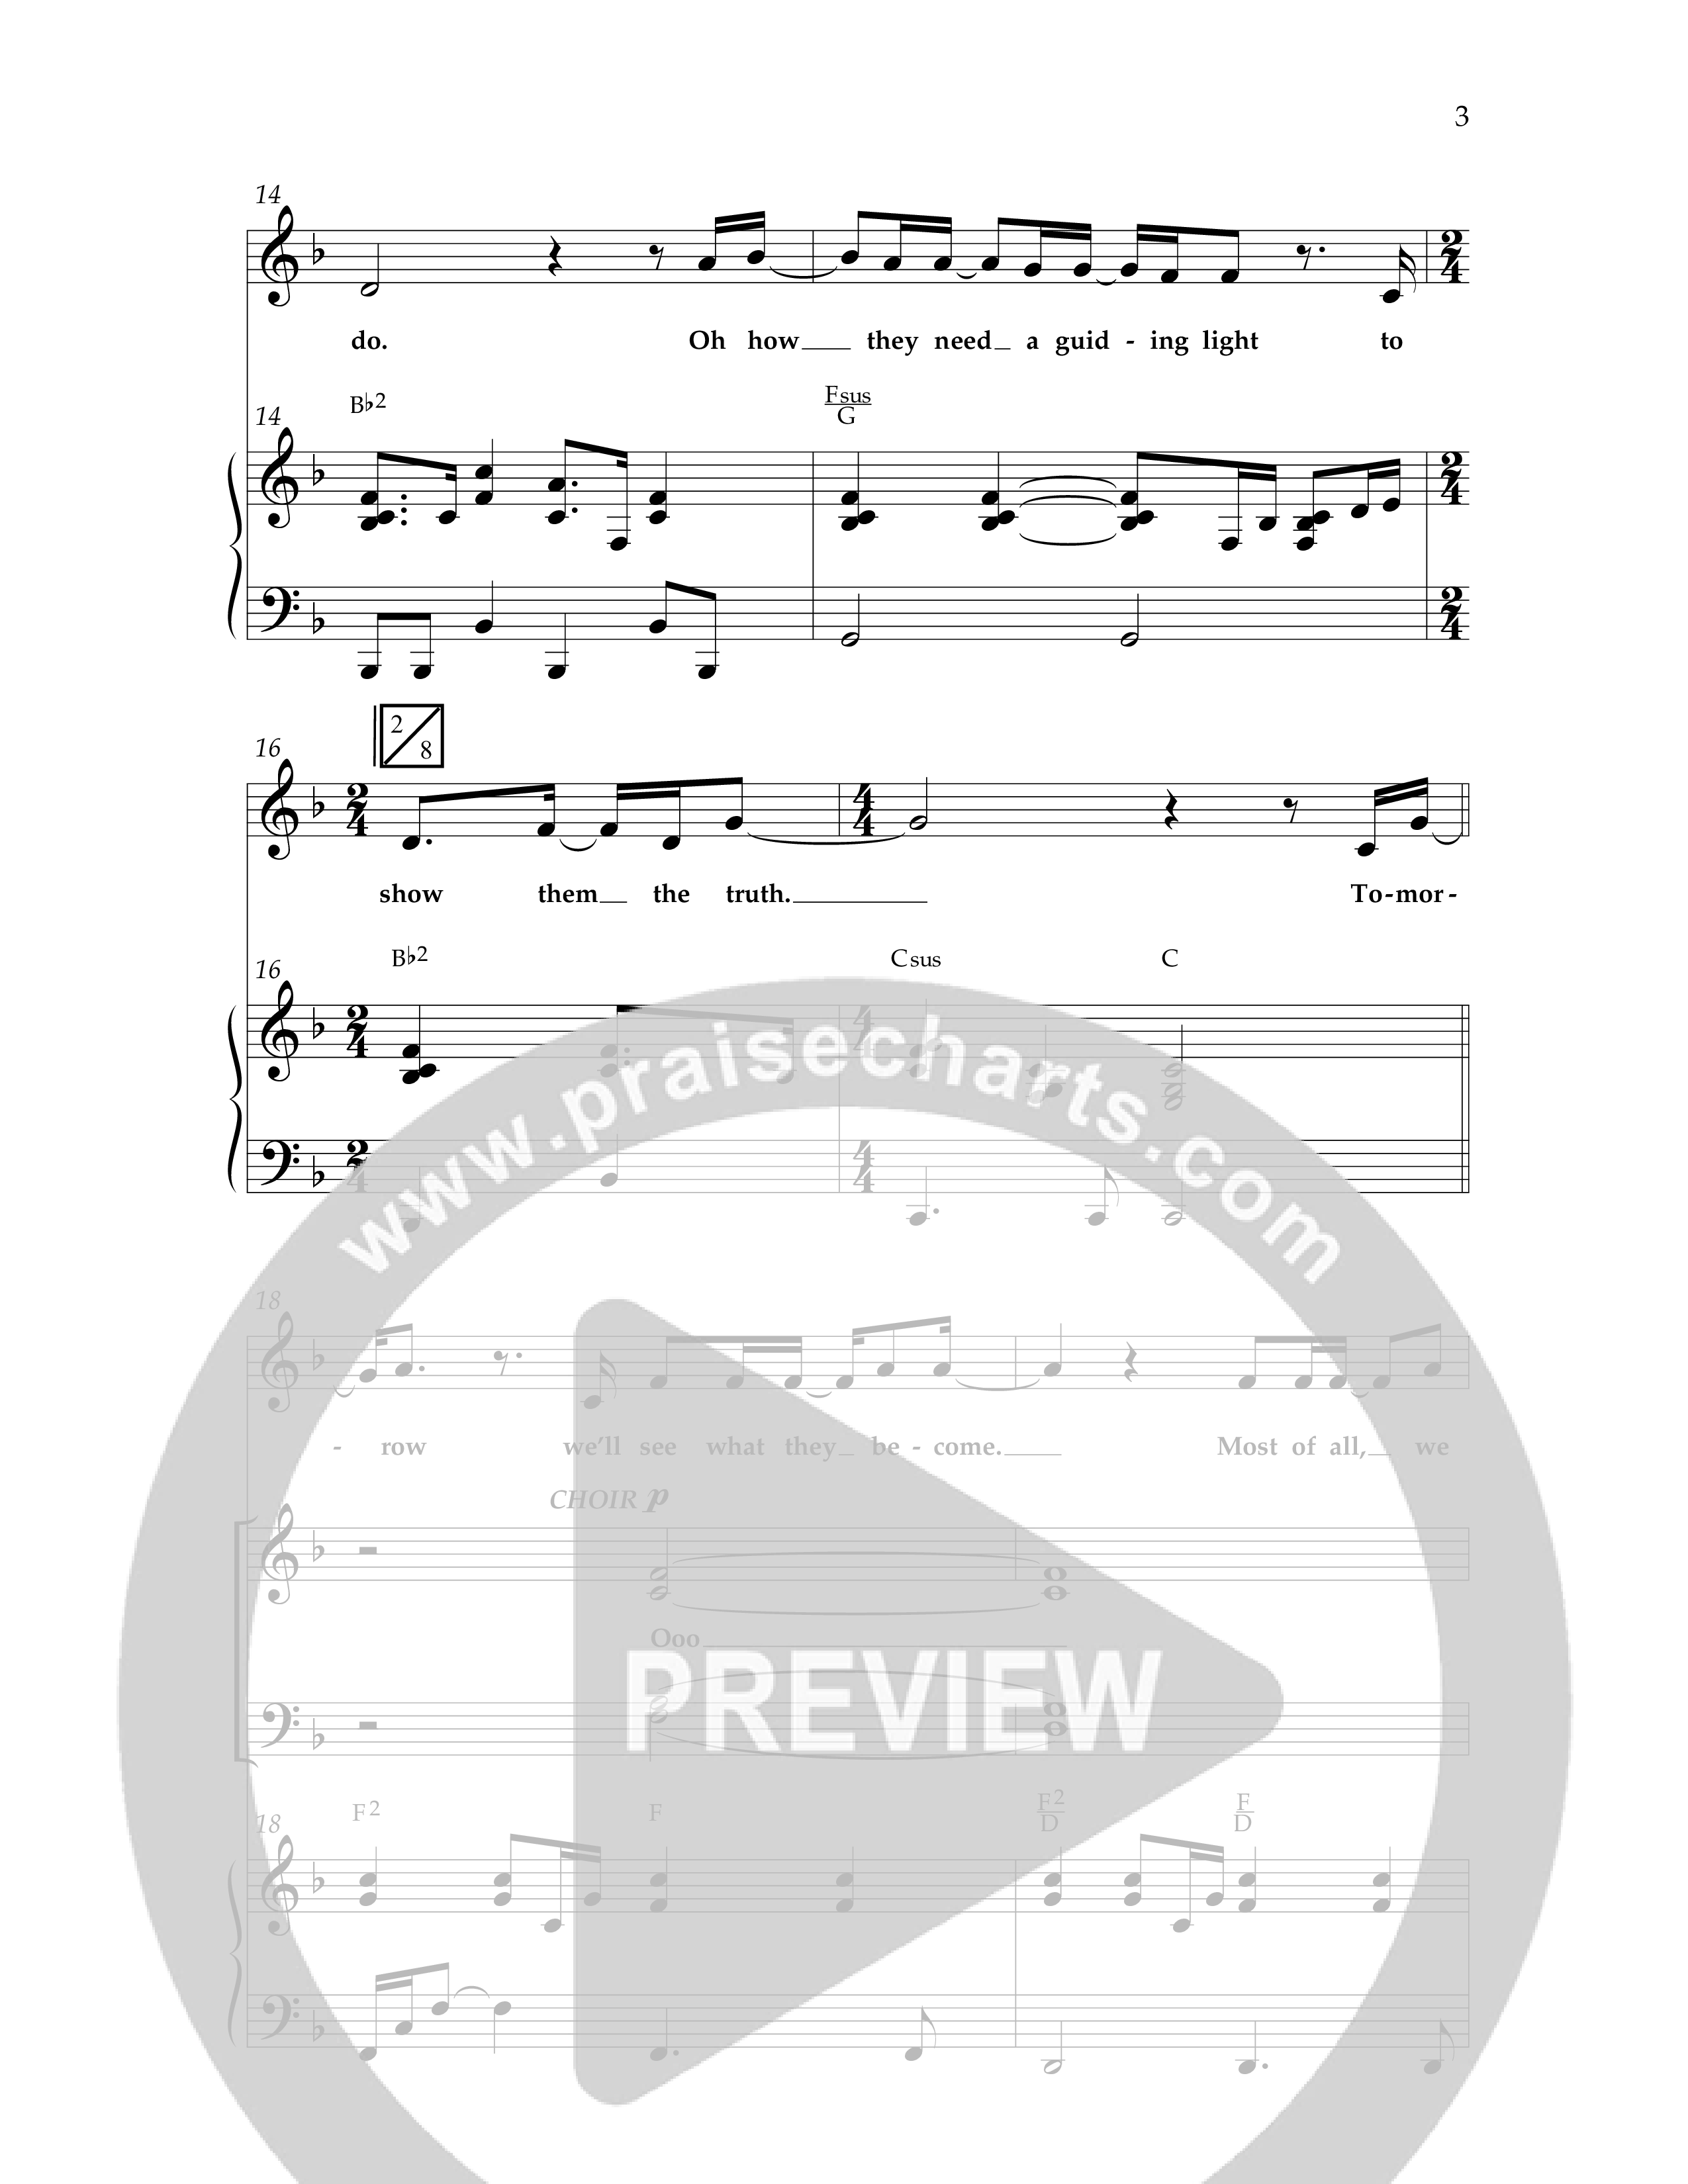 Tomorrow (Choral Anthem SATB) Anthem (SATB/Piano) (Lifeway Choral / Arr. Cliff Duren)